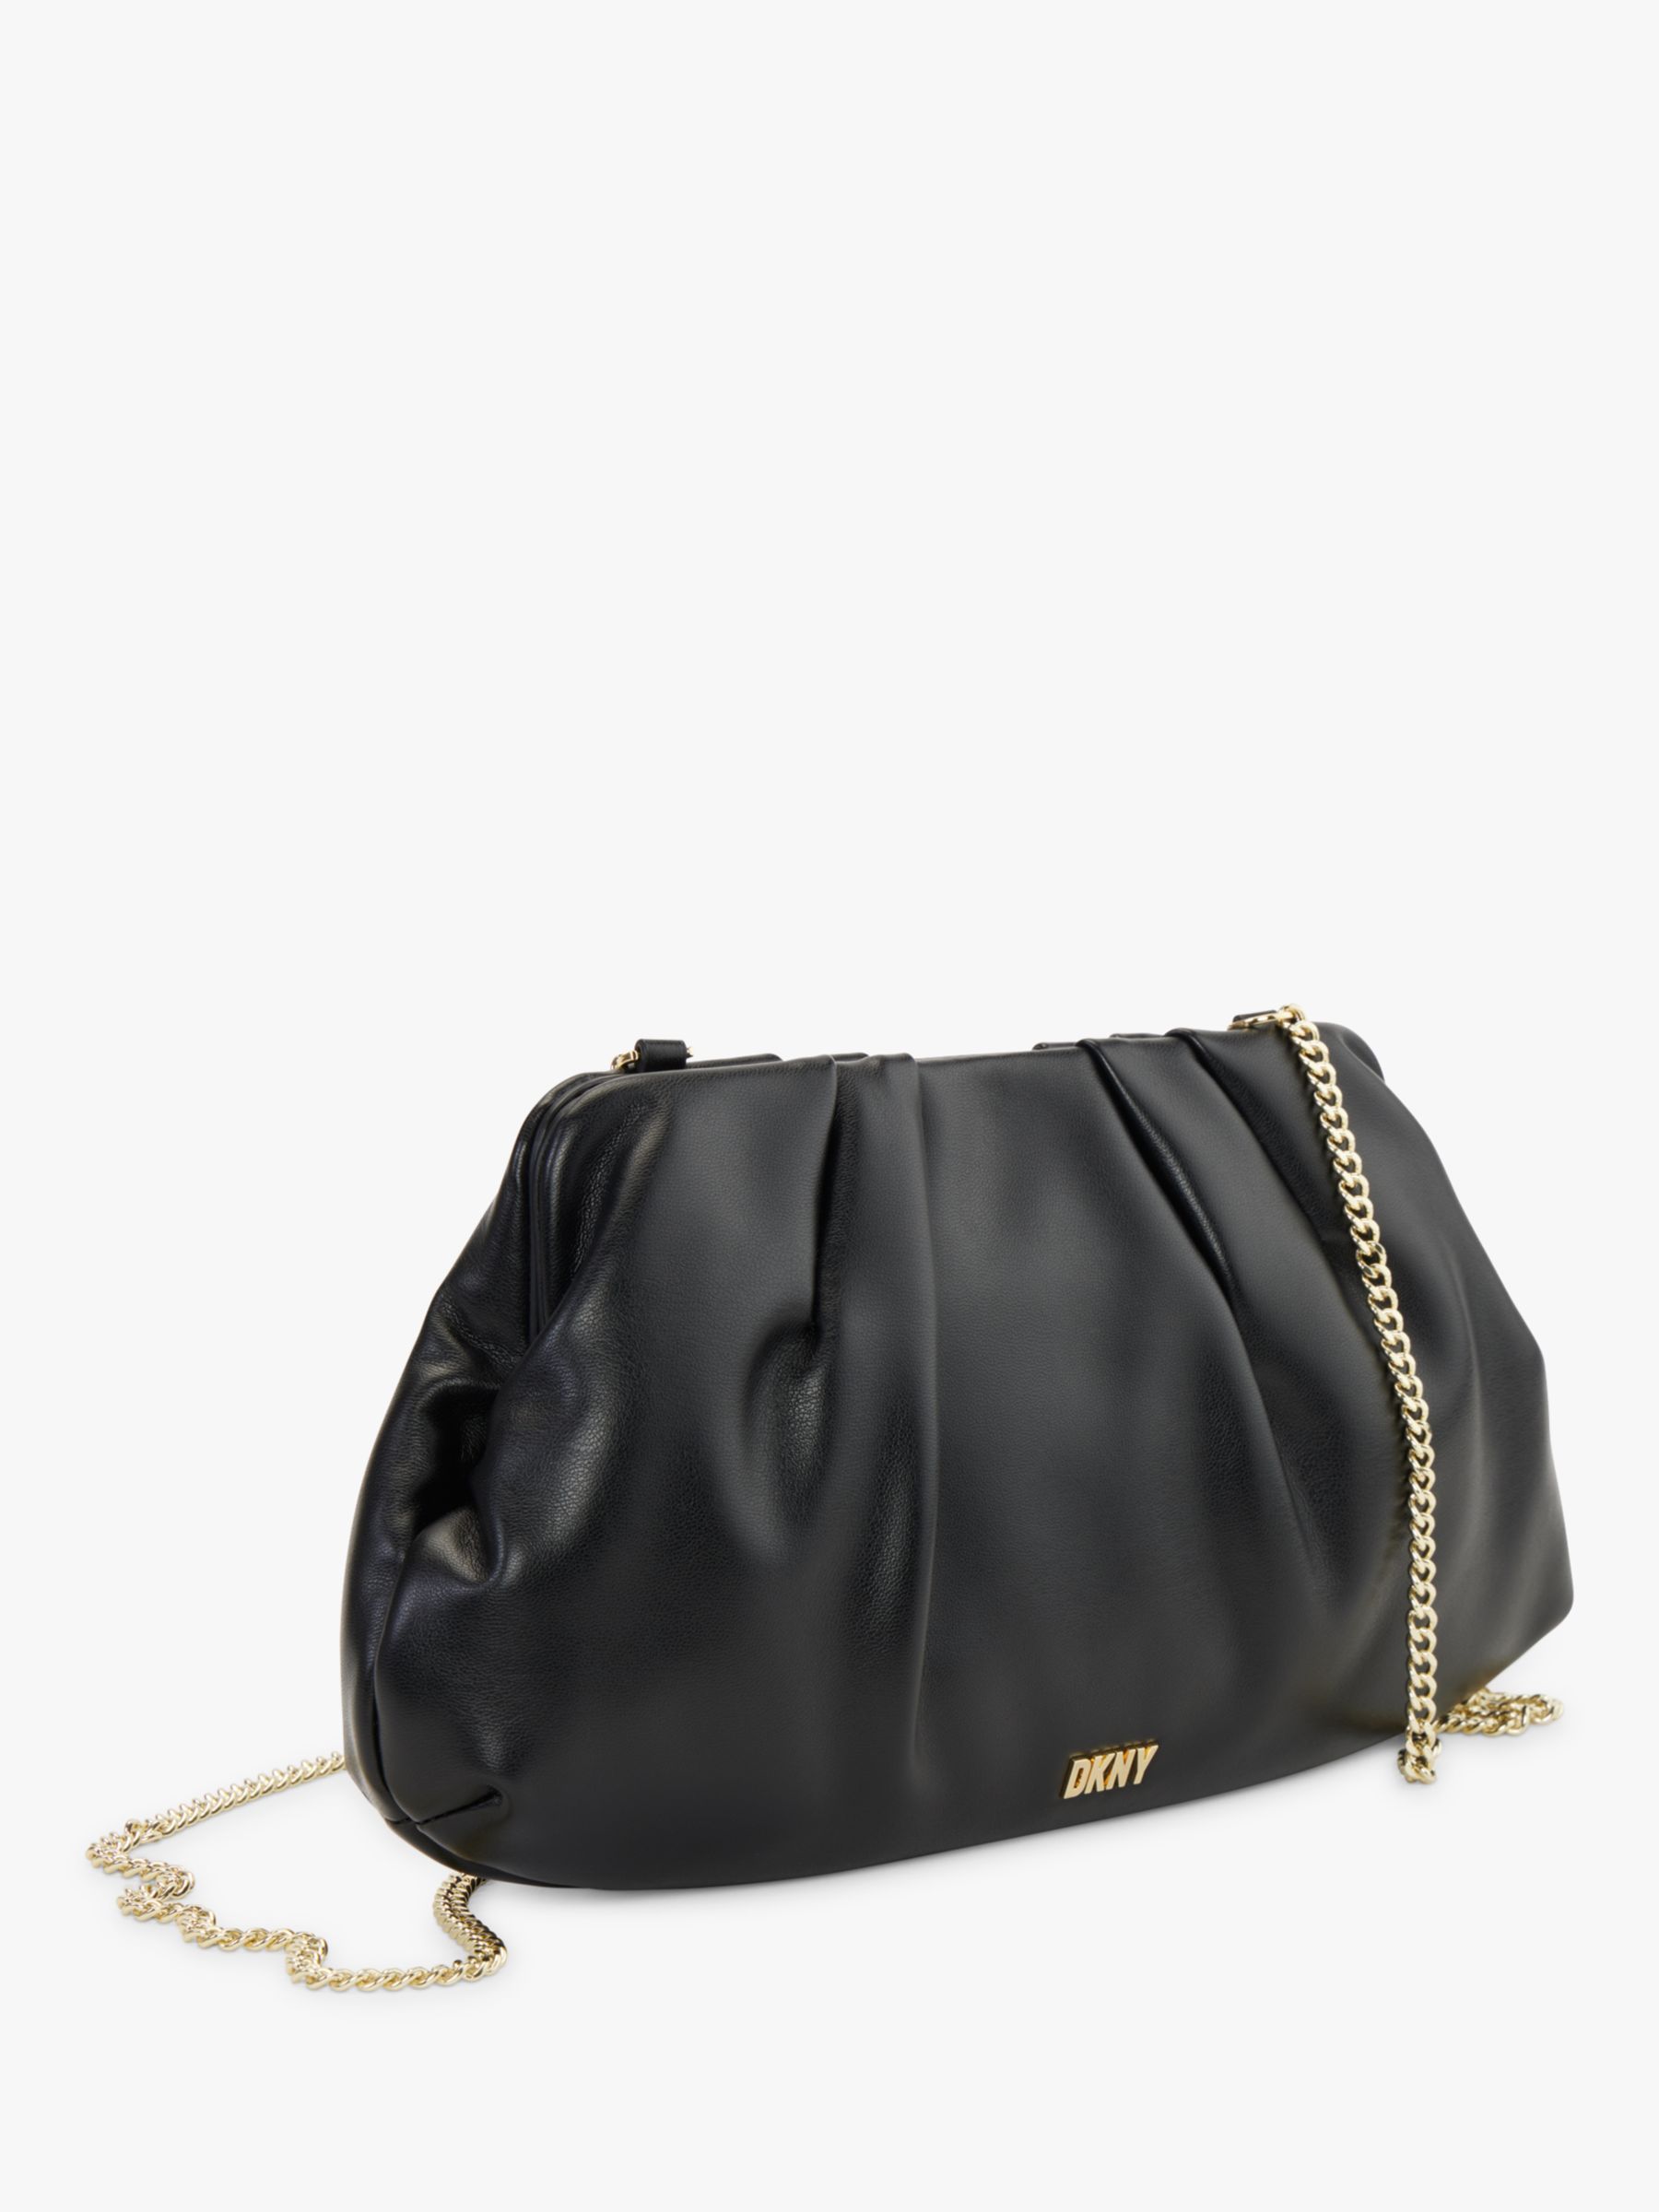 NWT DKNY Presley Shoulder Bag, Black Leather /Gold Chain